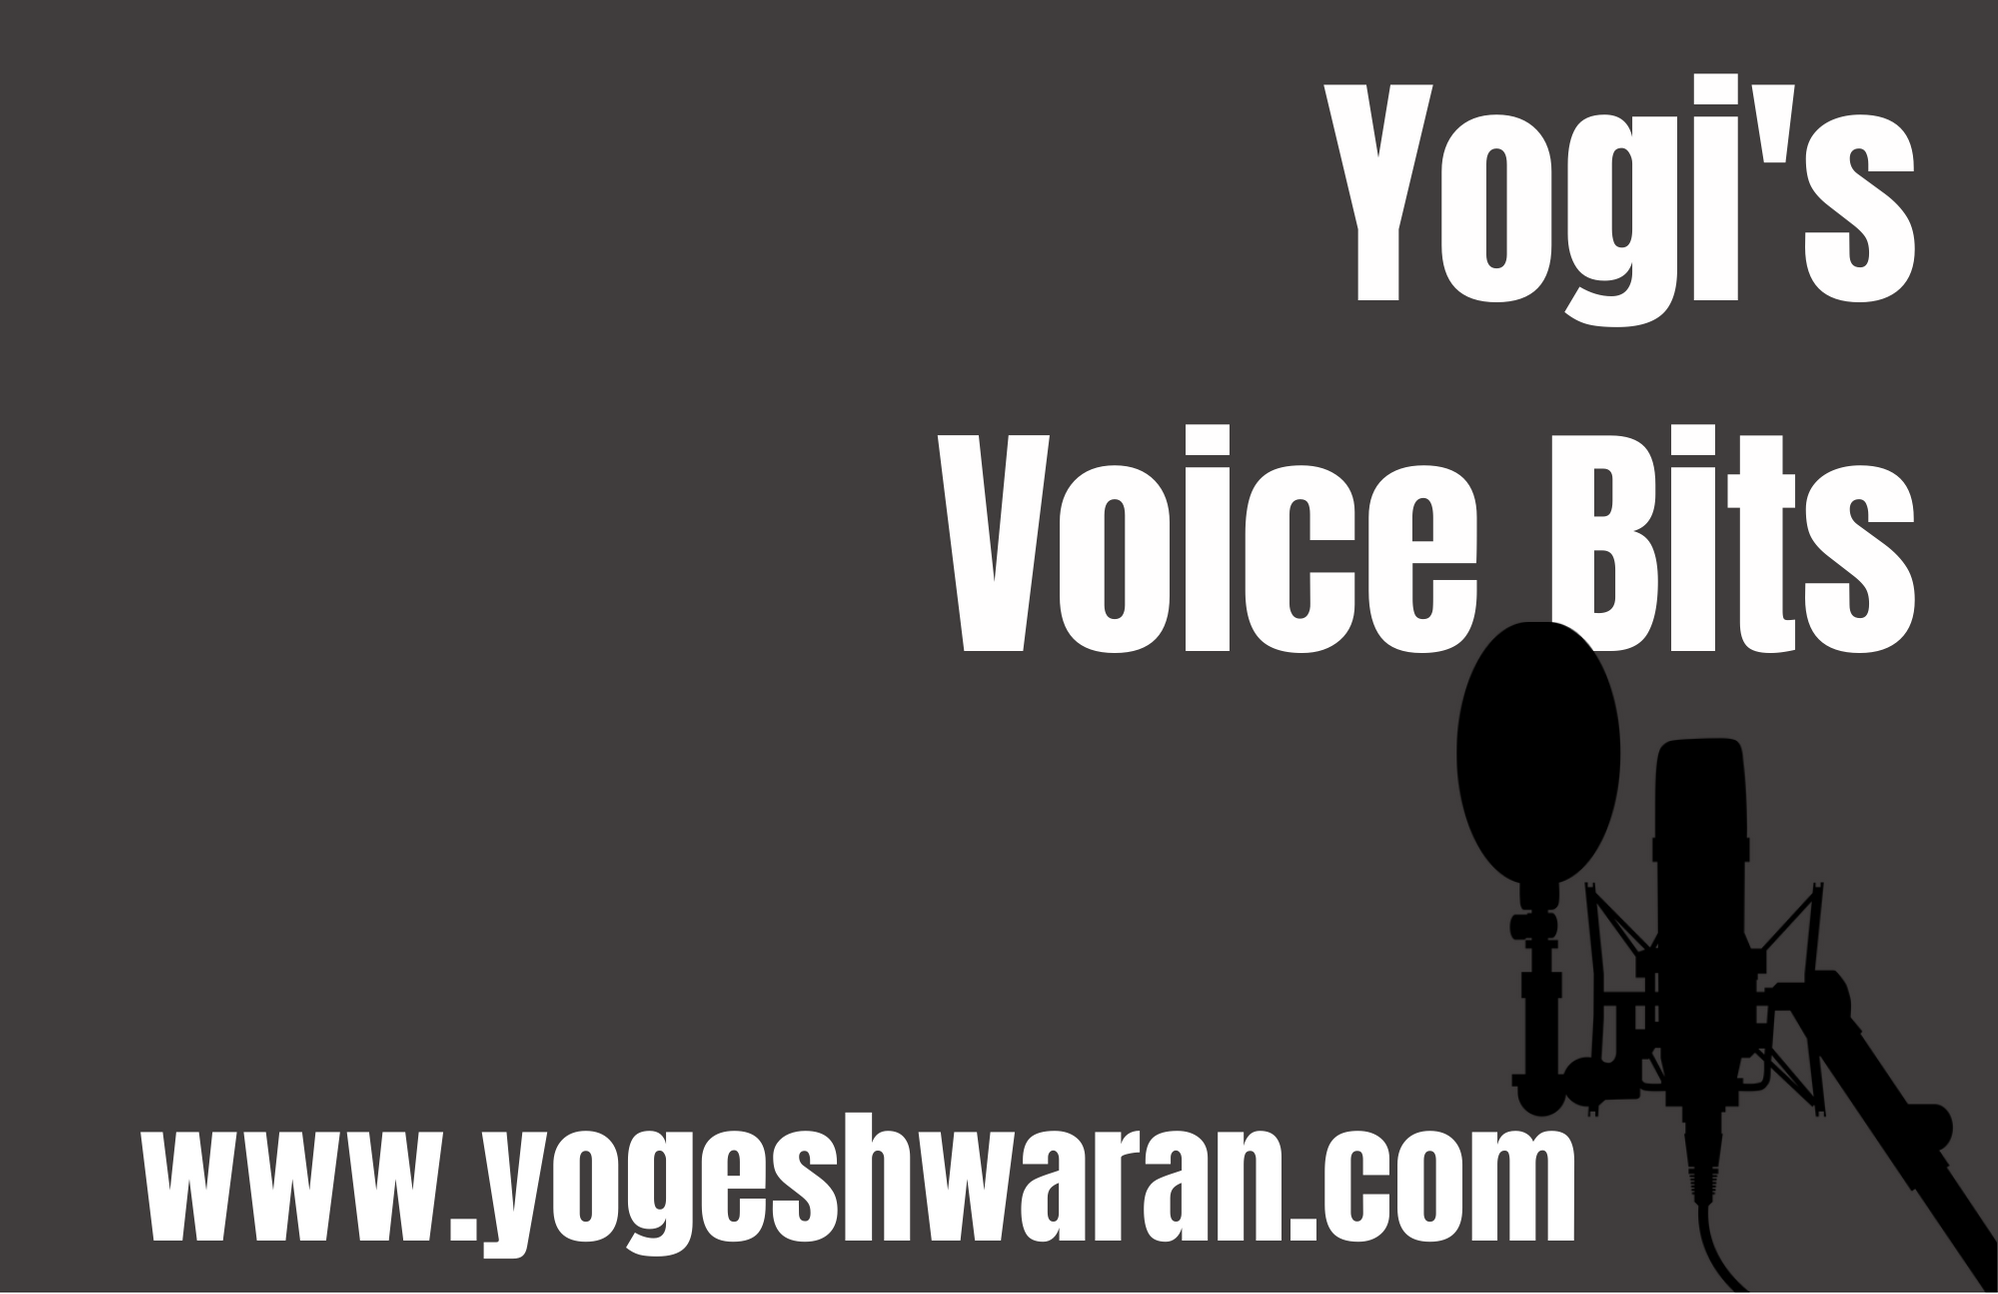 Yogi's Voice Bits logo